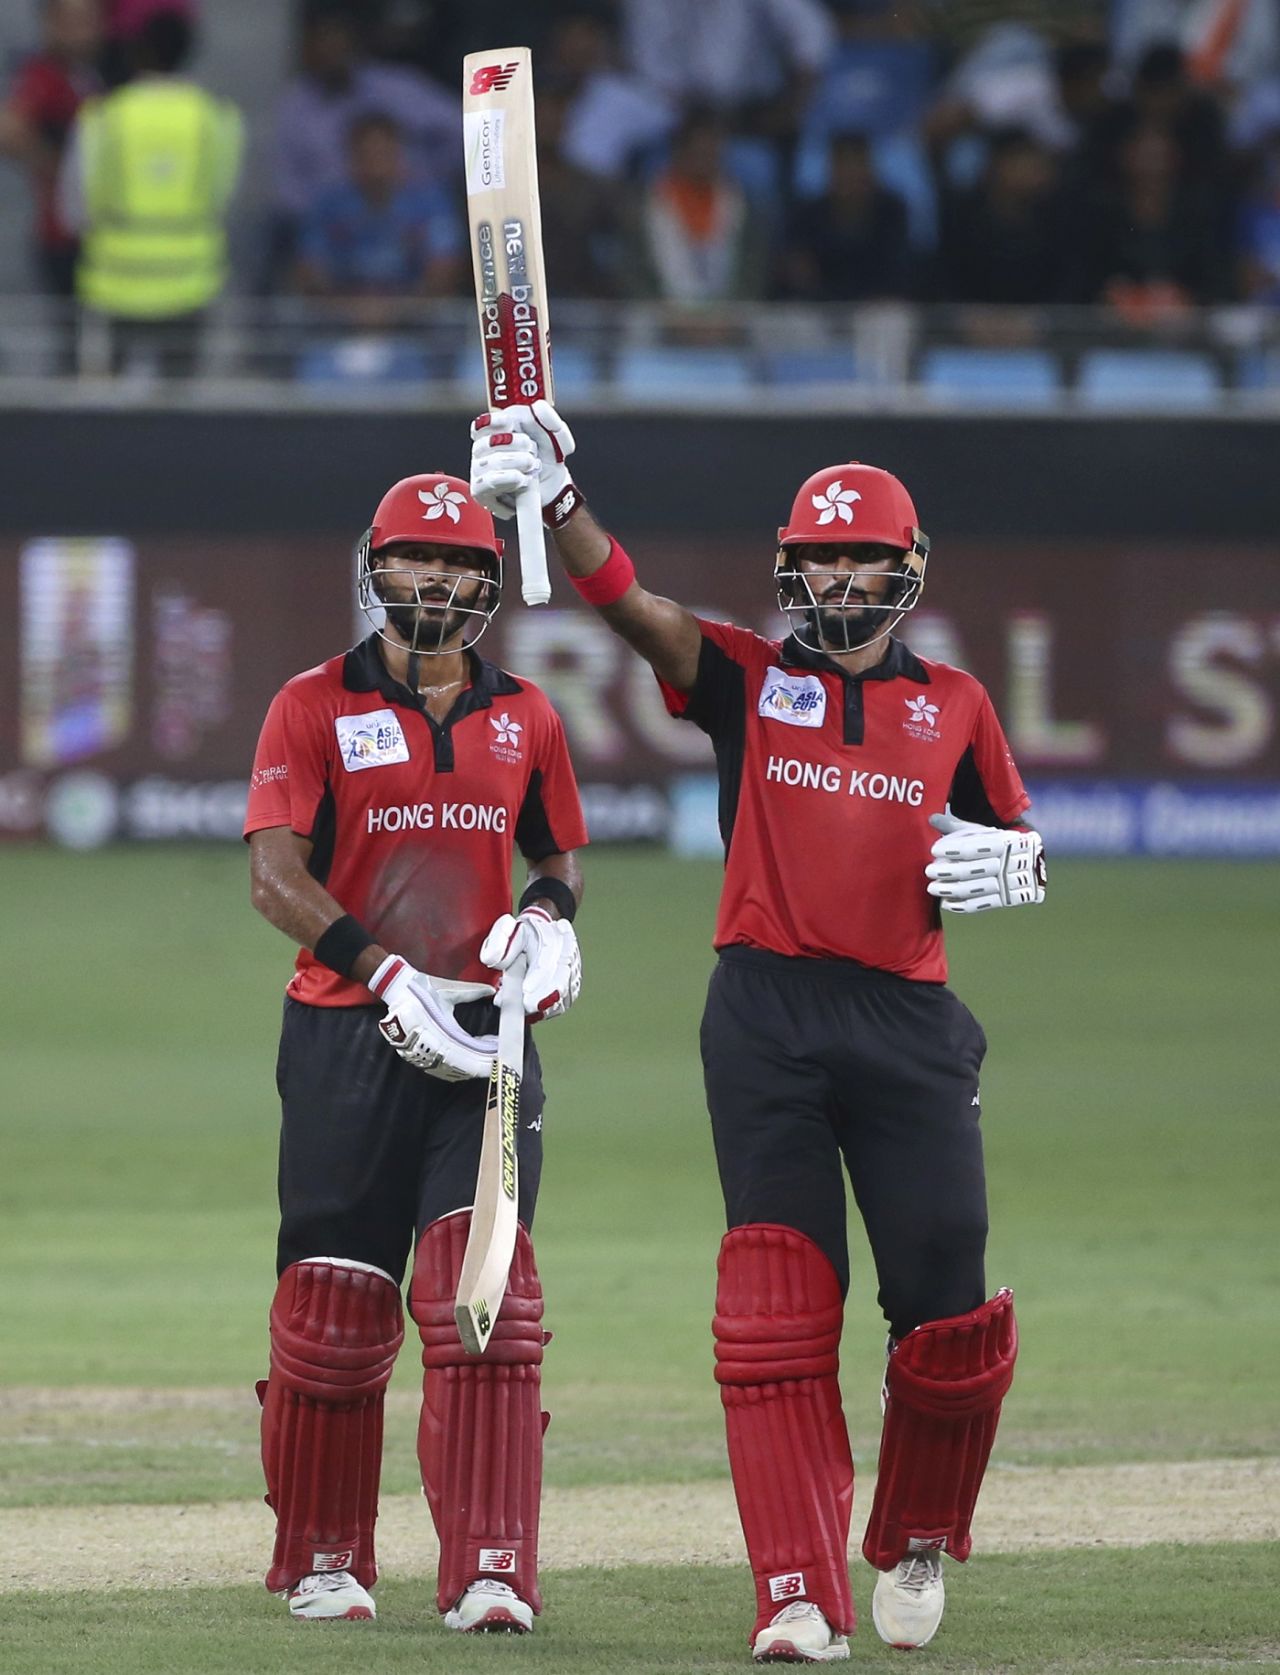 Anshy Rath looks on as Nizakat Khan raises the bat for his fifty, India v Hong Kong, Asia Cup 2018, Dubai, September 18, 2018